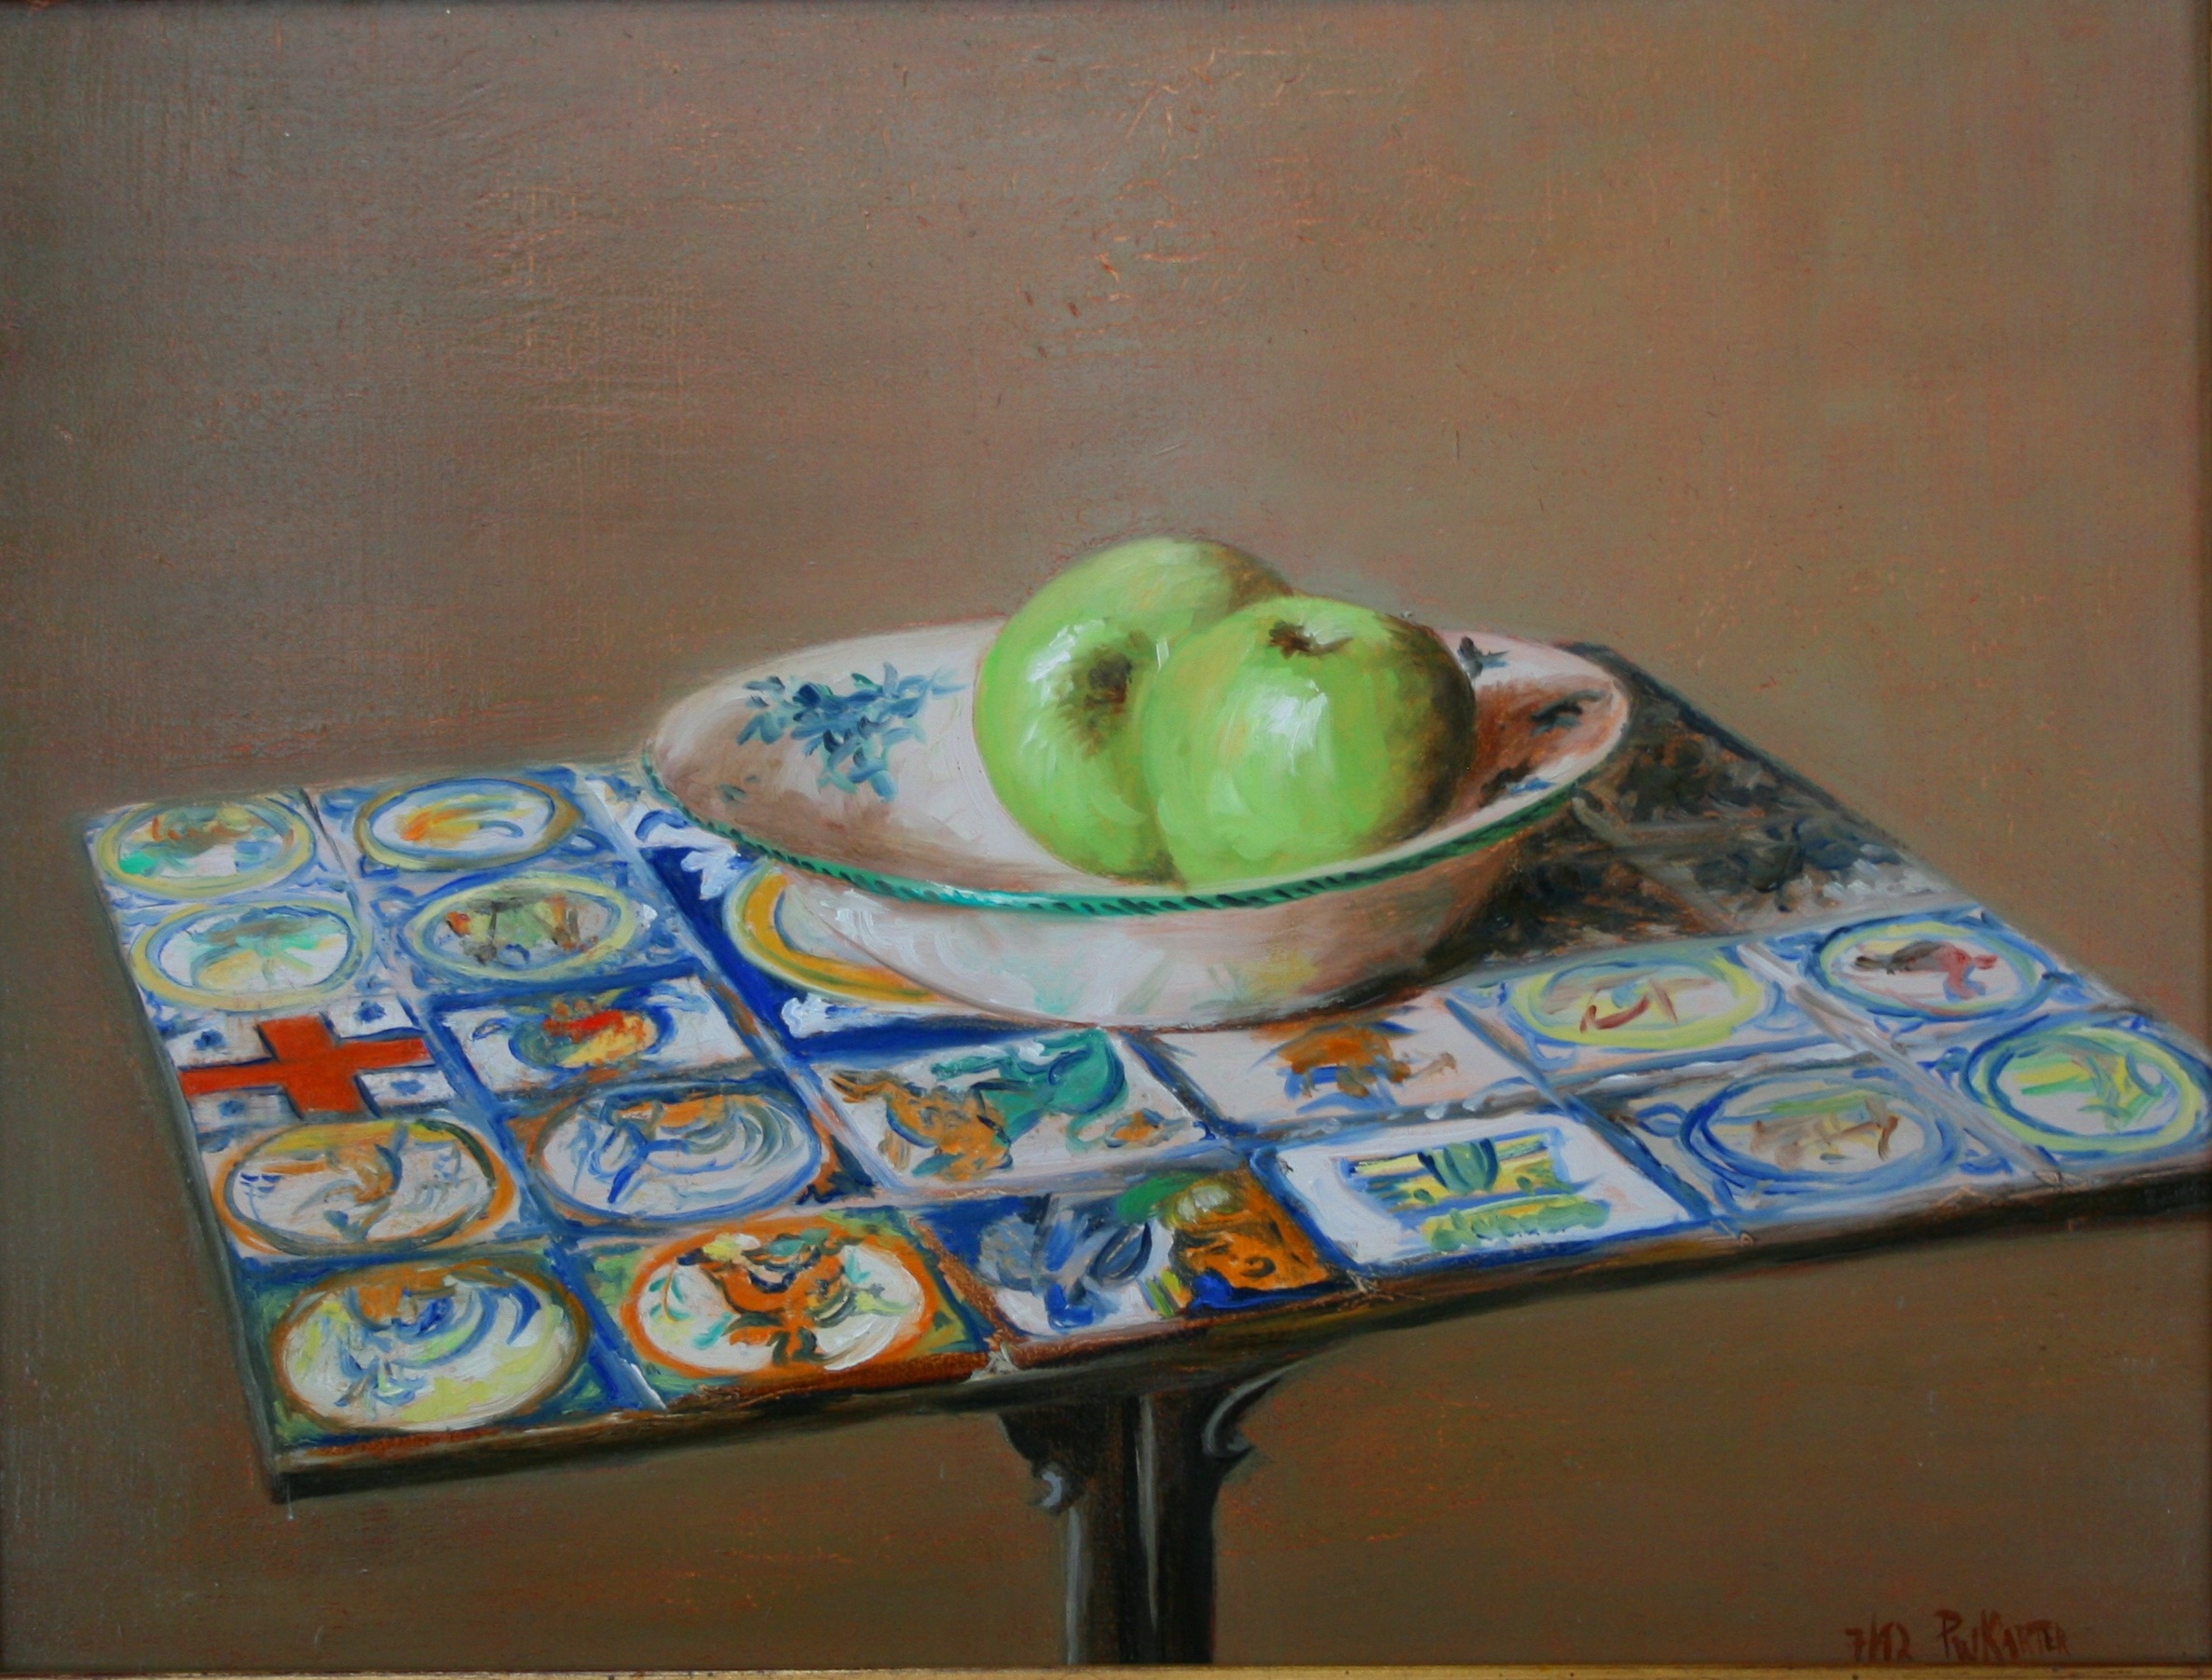   #&nbsp;52 &nbsp; Tile Table with apples &nbsp; 11 1/2 " x 15" &nbsp; Damarascotta, ME  